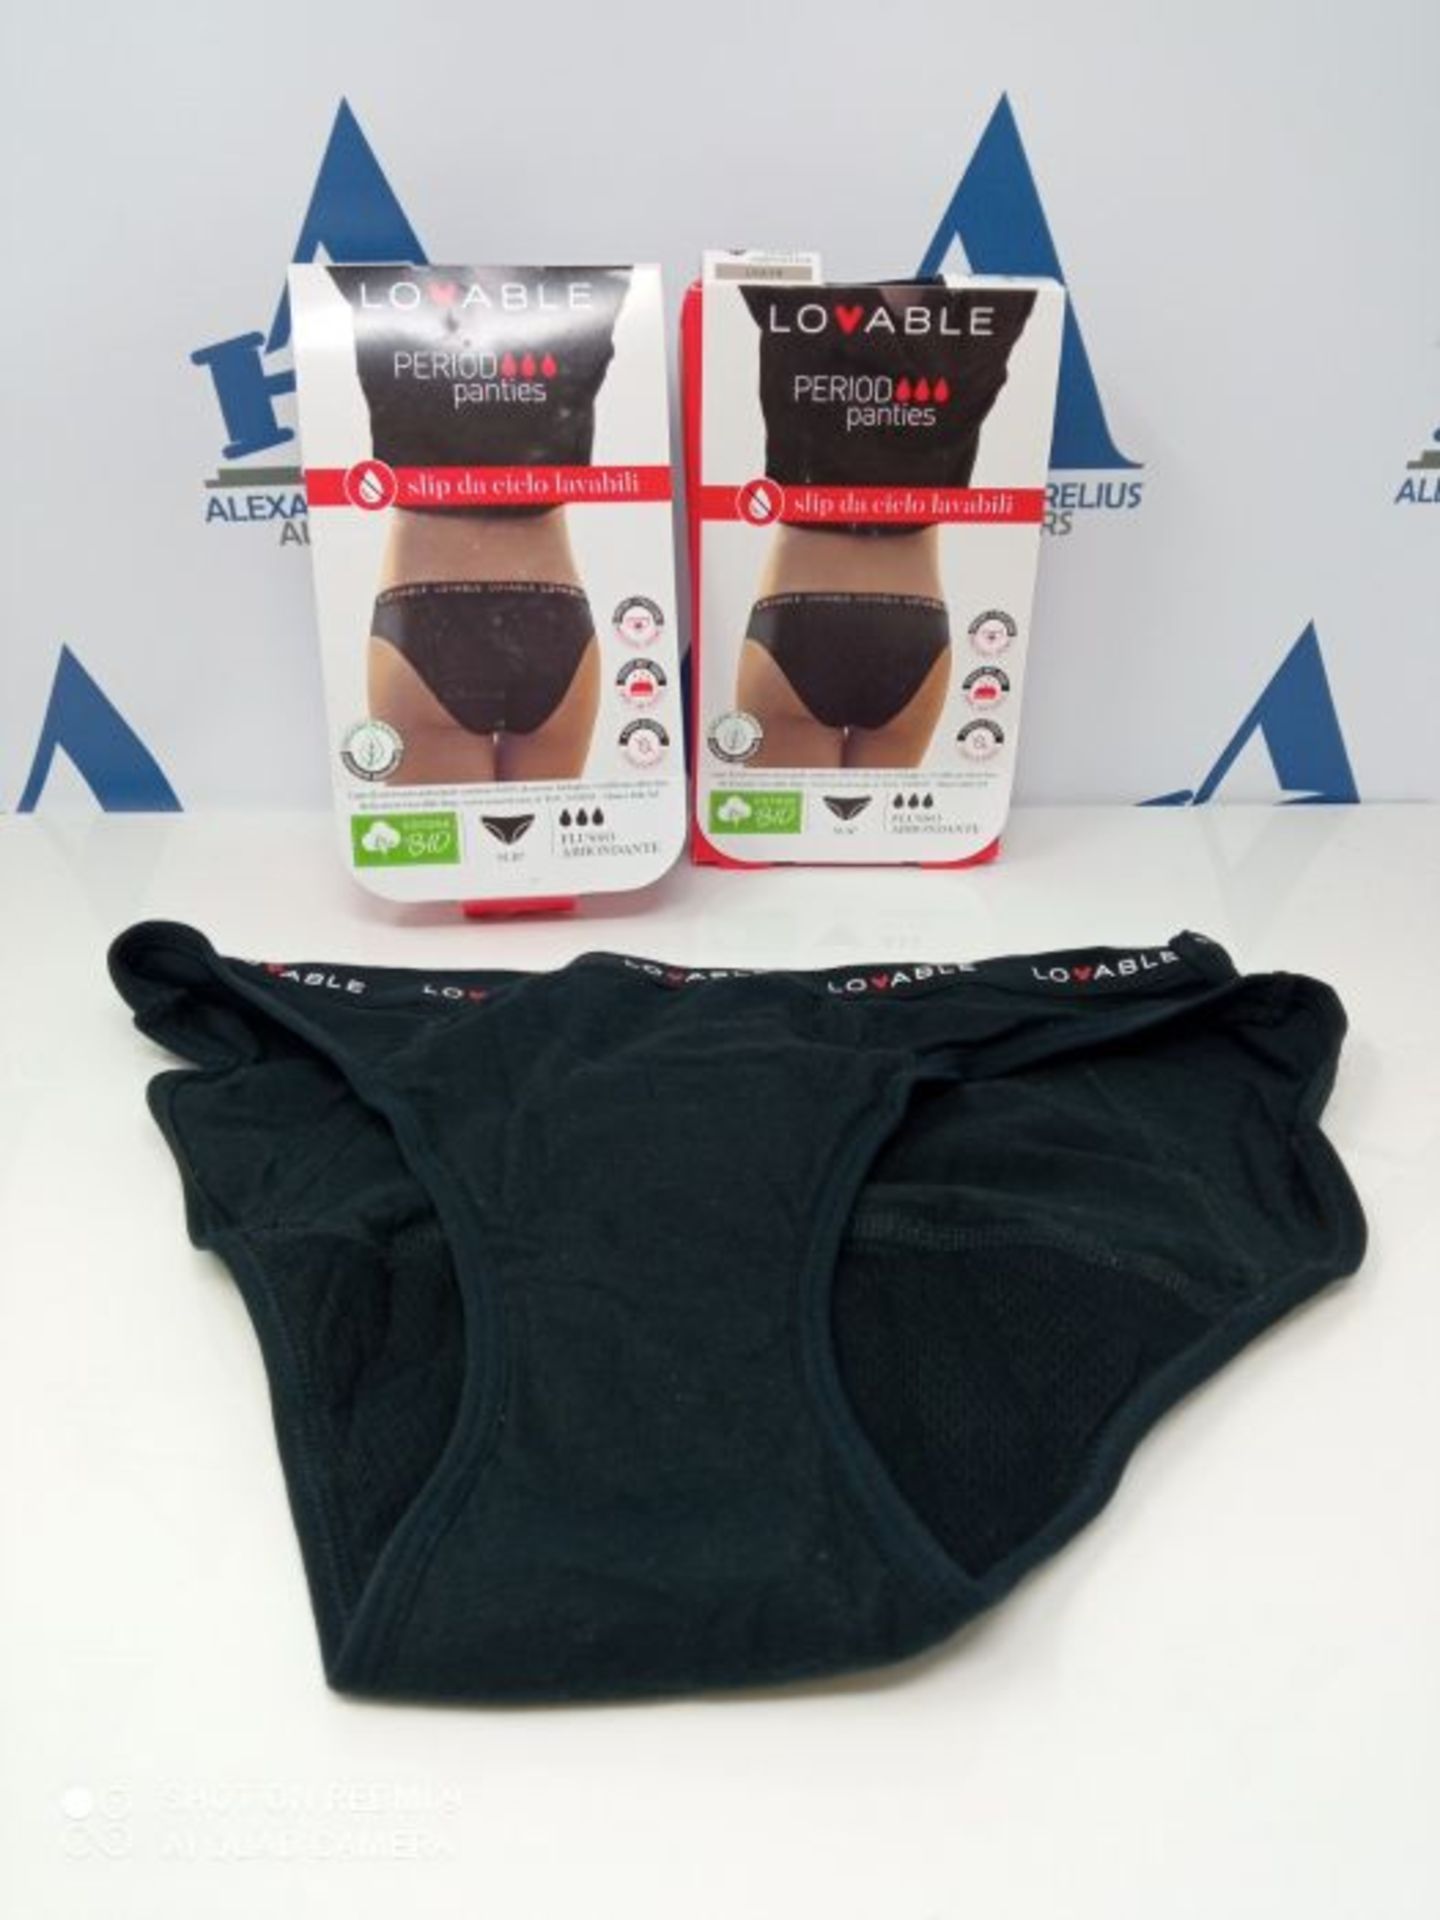 Lovable Women's Period Panties Underwear, Nero, M (Pack of 2) - Image 2 of 3